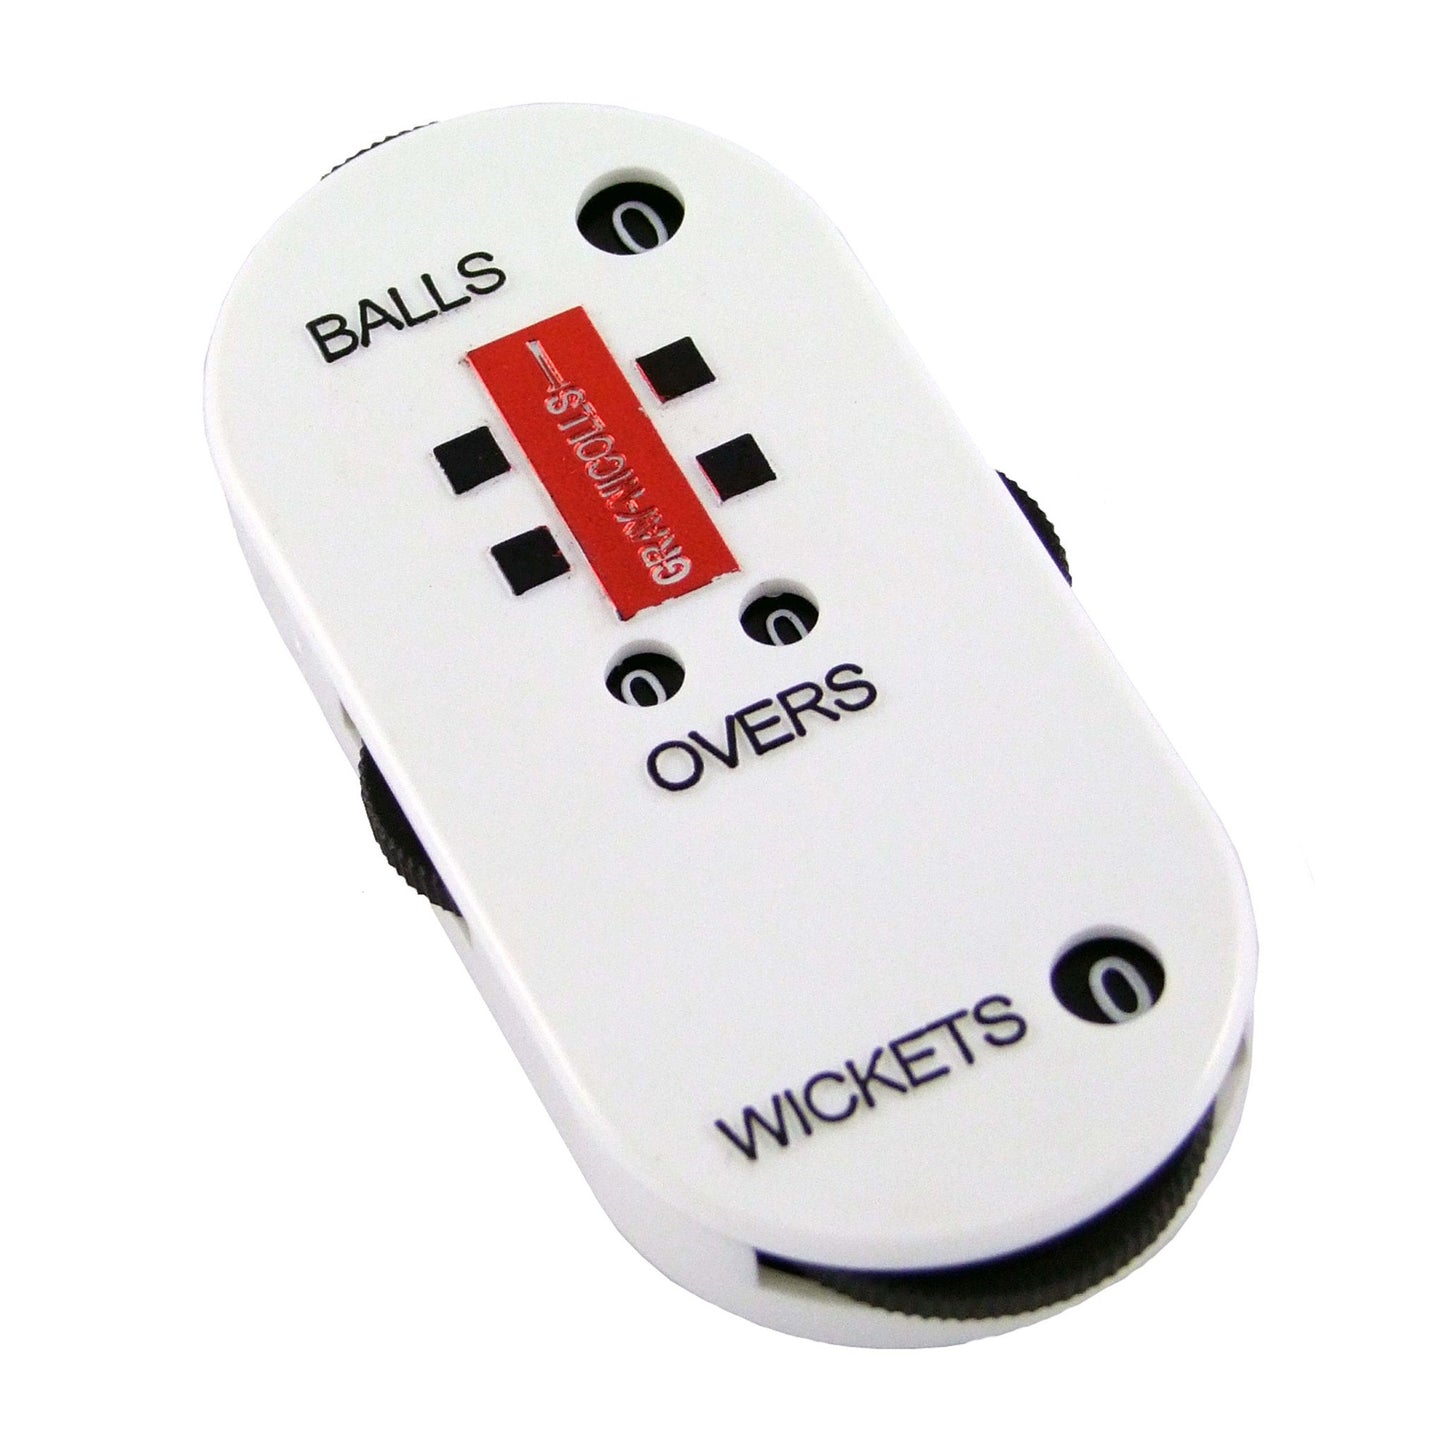 Gray Nicolls umpires Cricket counter